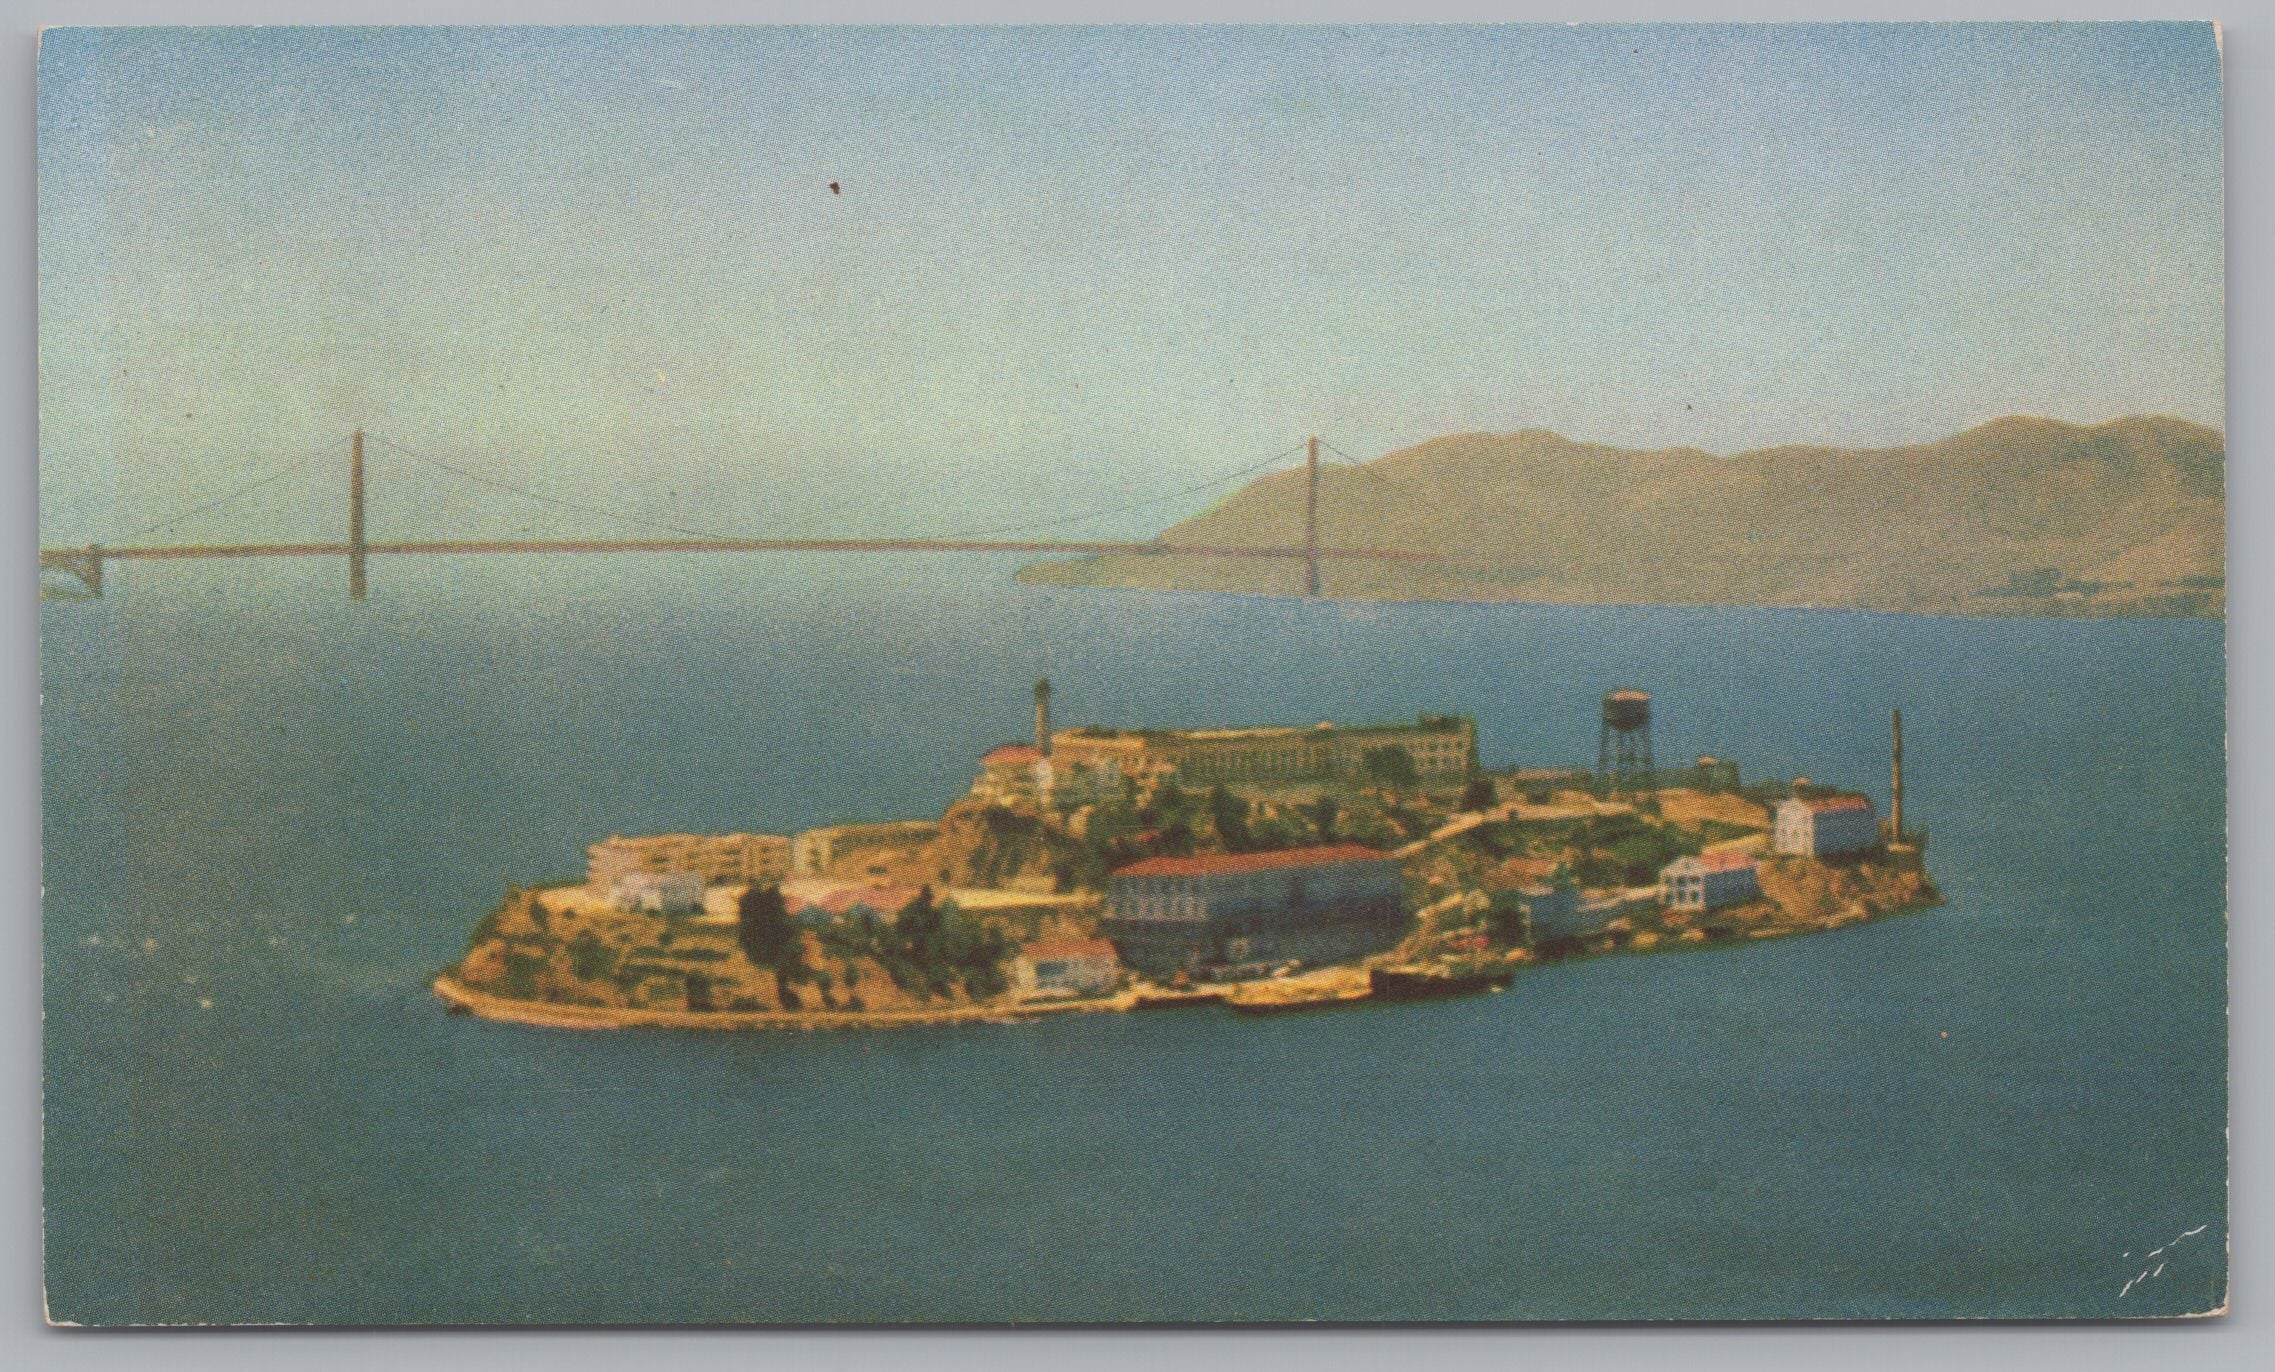 Aerial View Of Alcatraz Prison, The Rock, San Francisco, California, USA, Vintage Post Card.